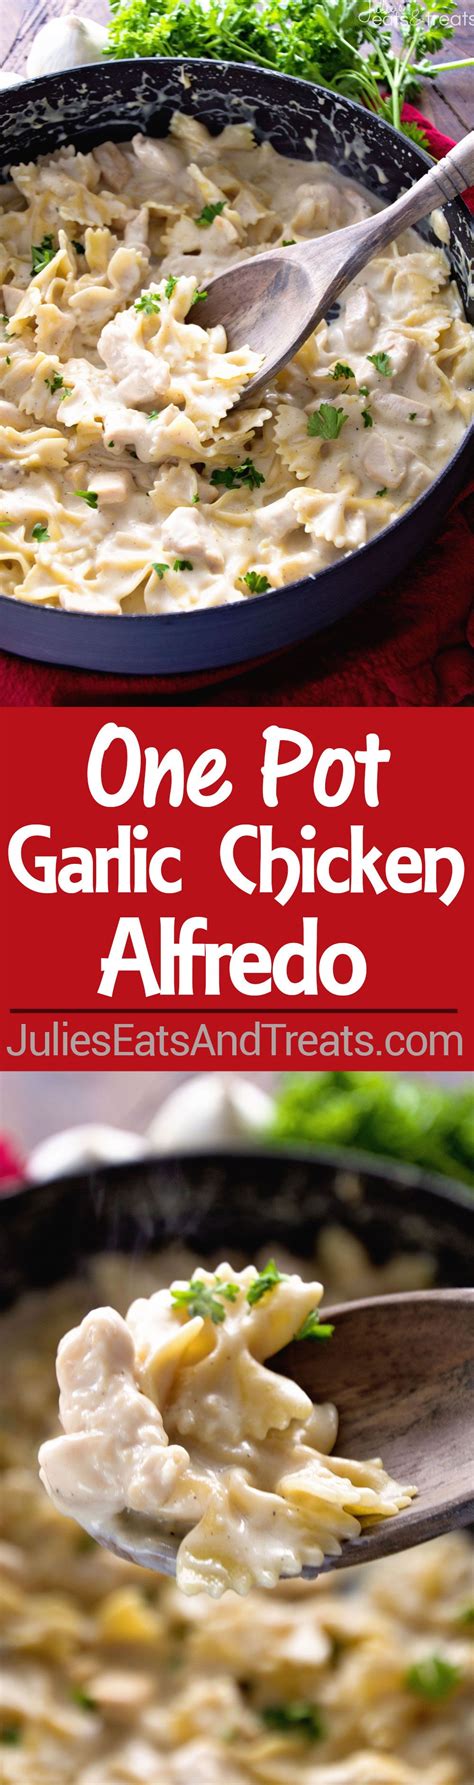 One Pot Garlic Chicken Alfredo Recipe Julies Eats And Treats Recipes